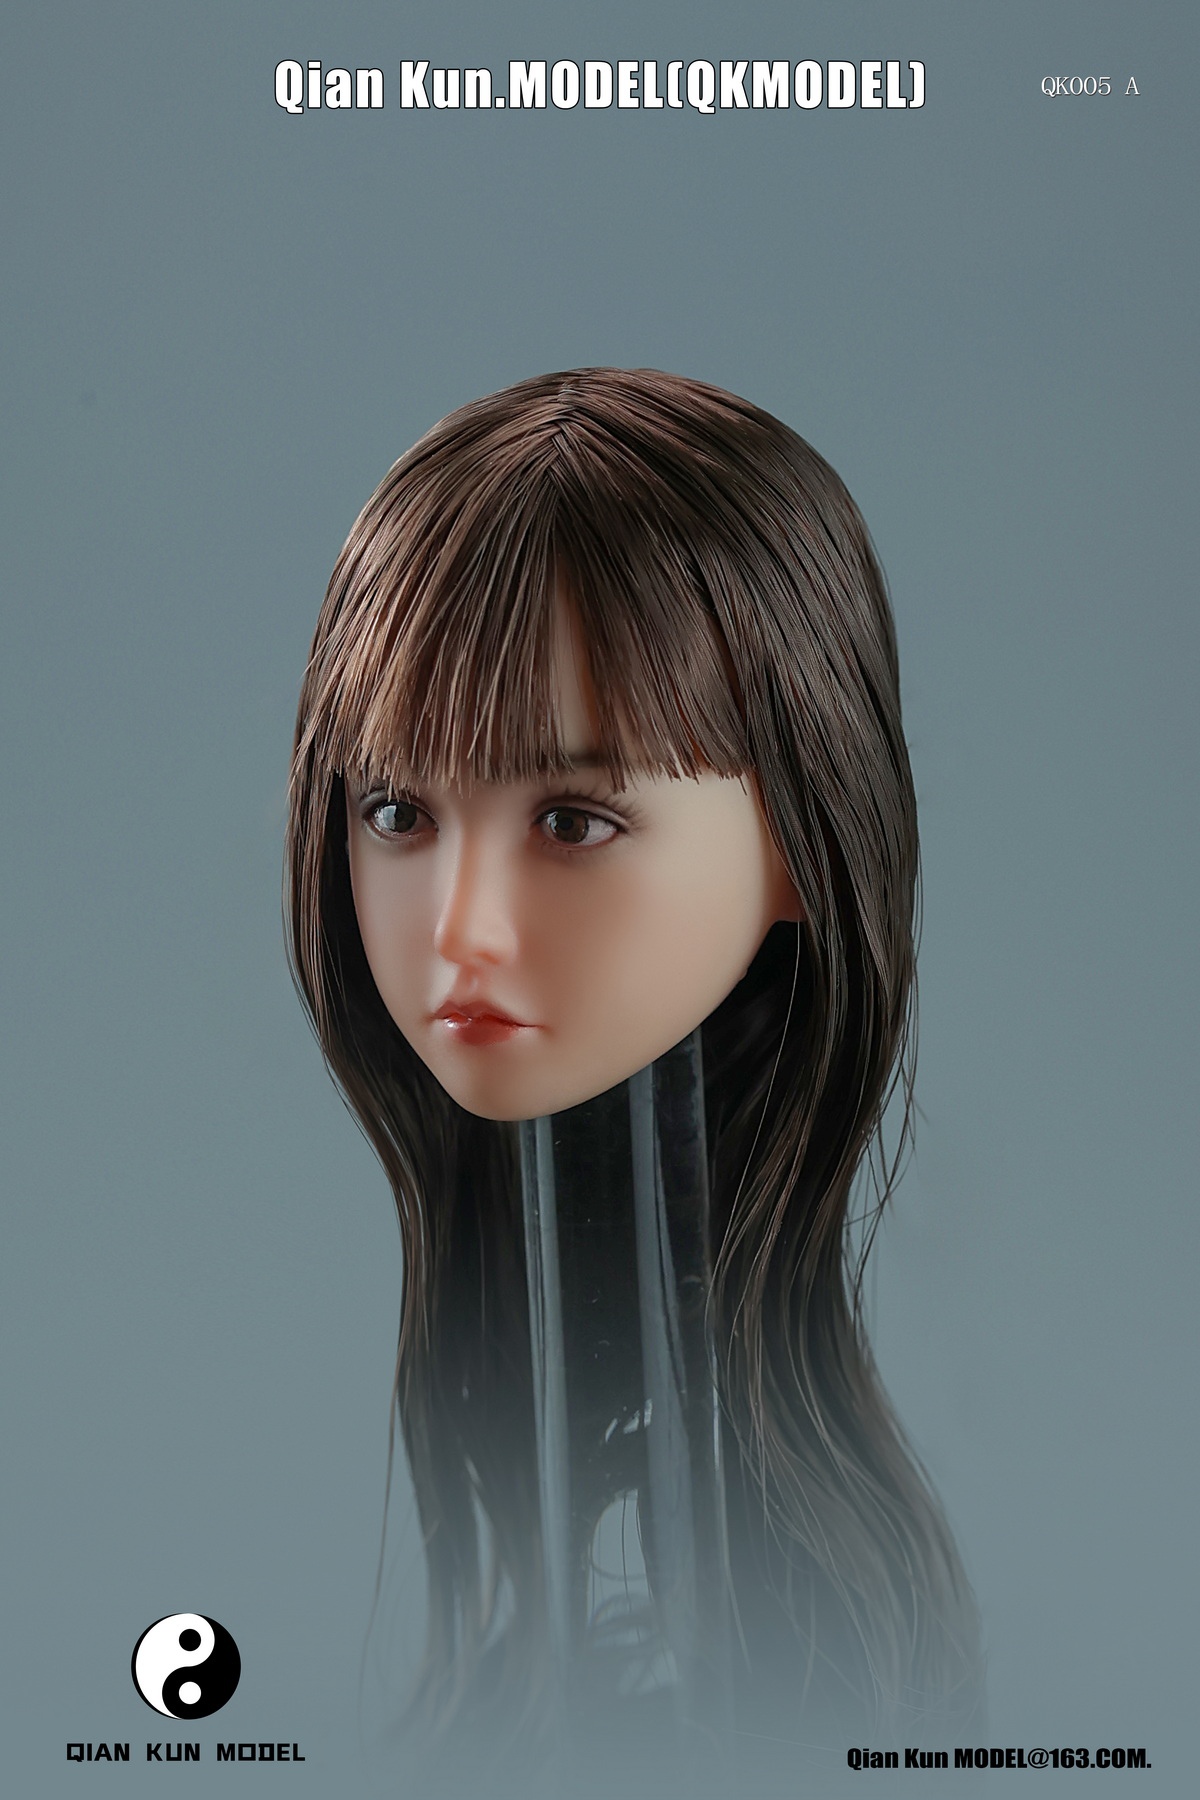 head - NEW PRODUCT: Qian Kun.Model - Sweet Asian Female Head Sculpture (QK005-A/B/C) 03100